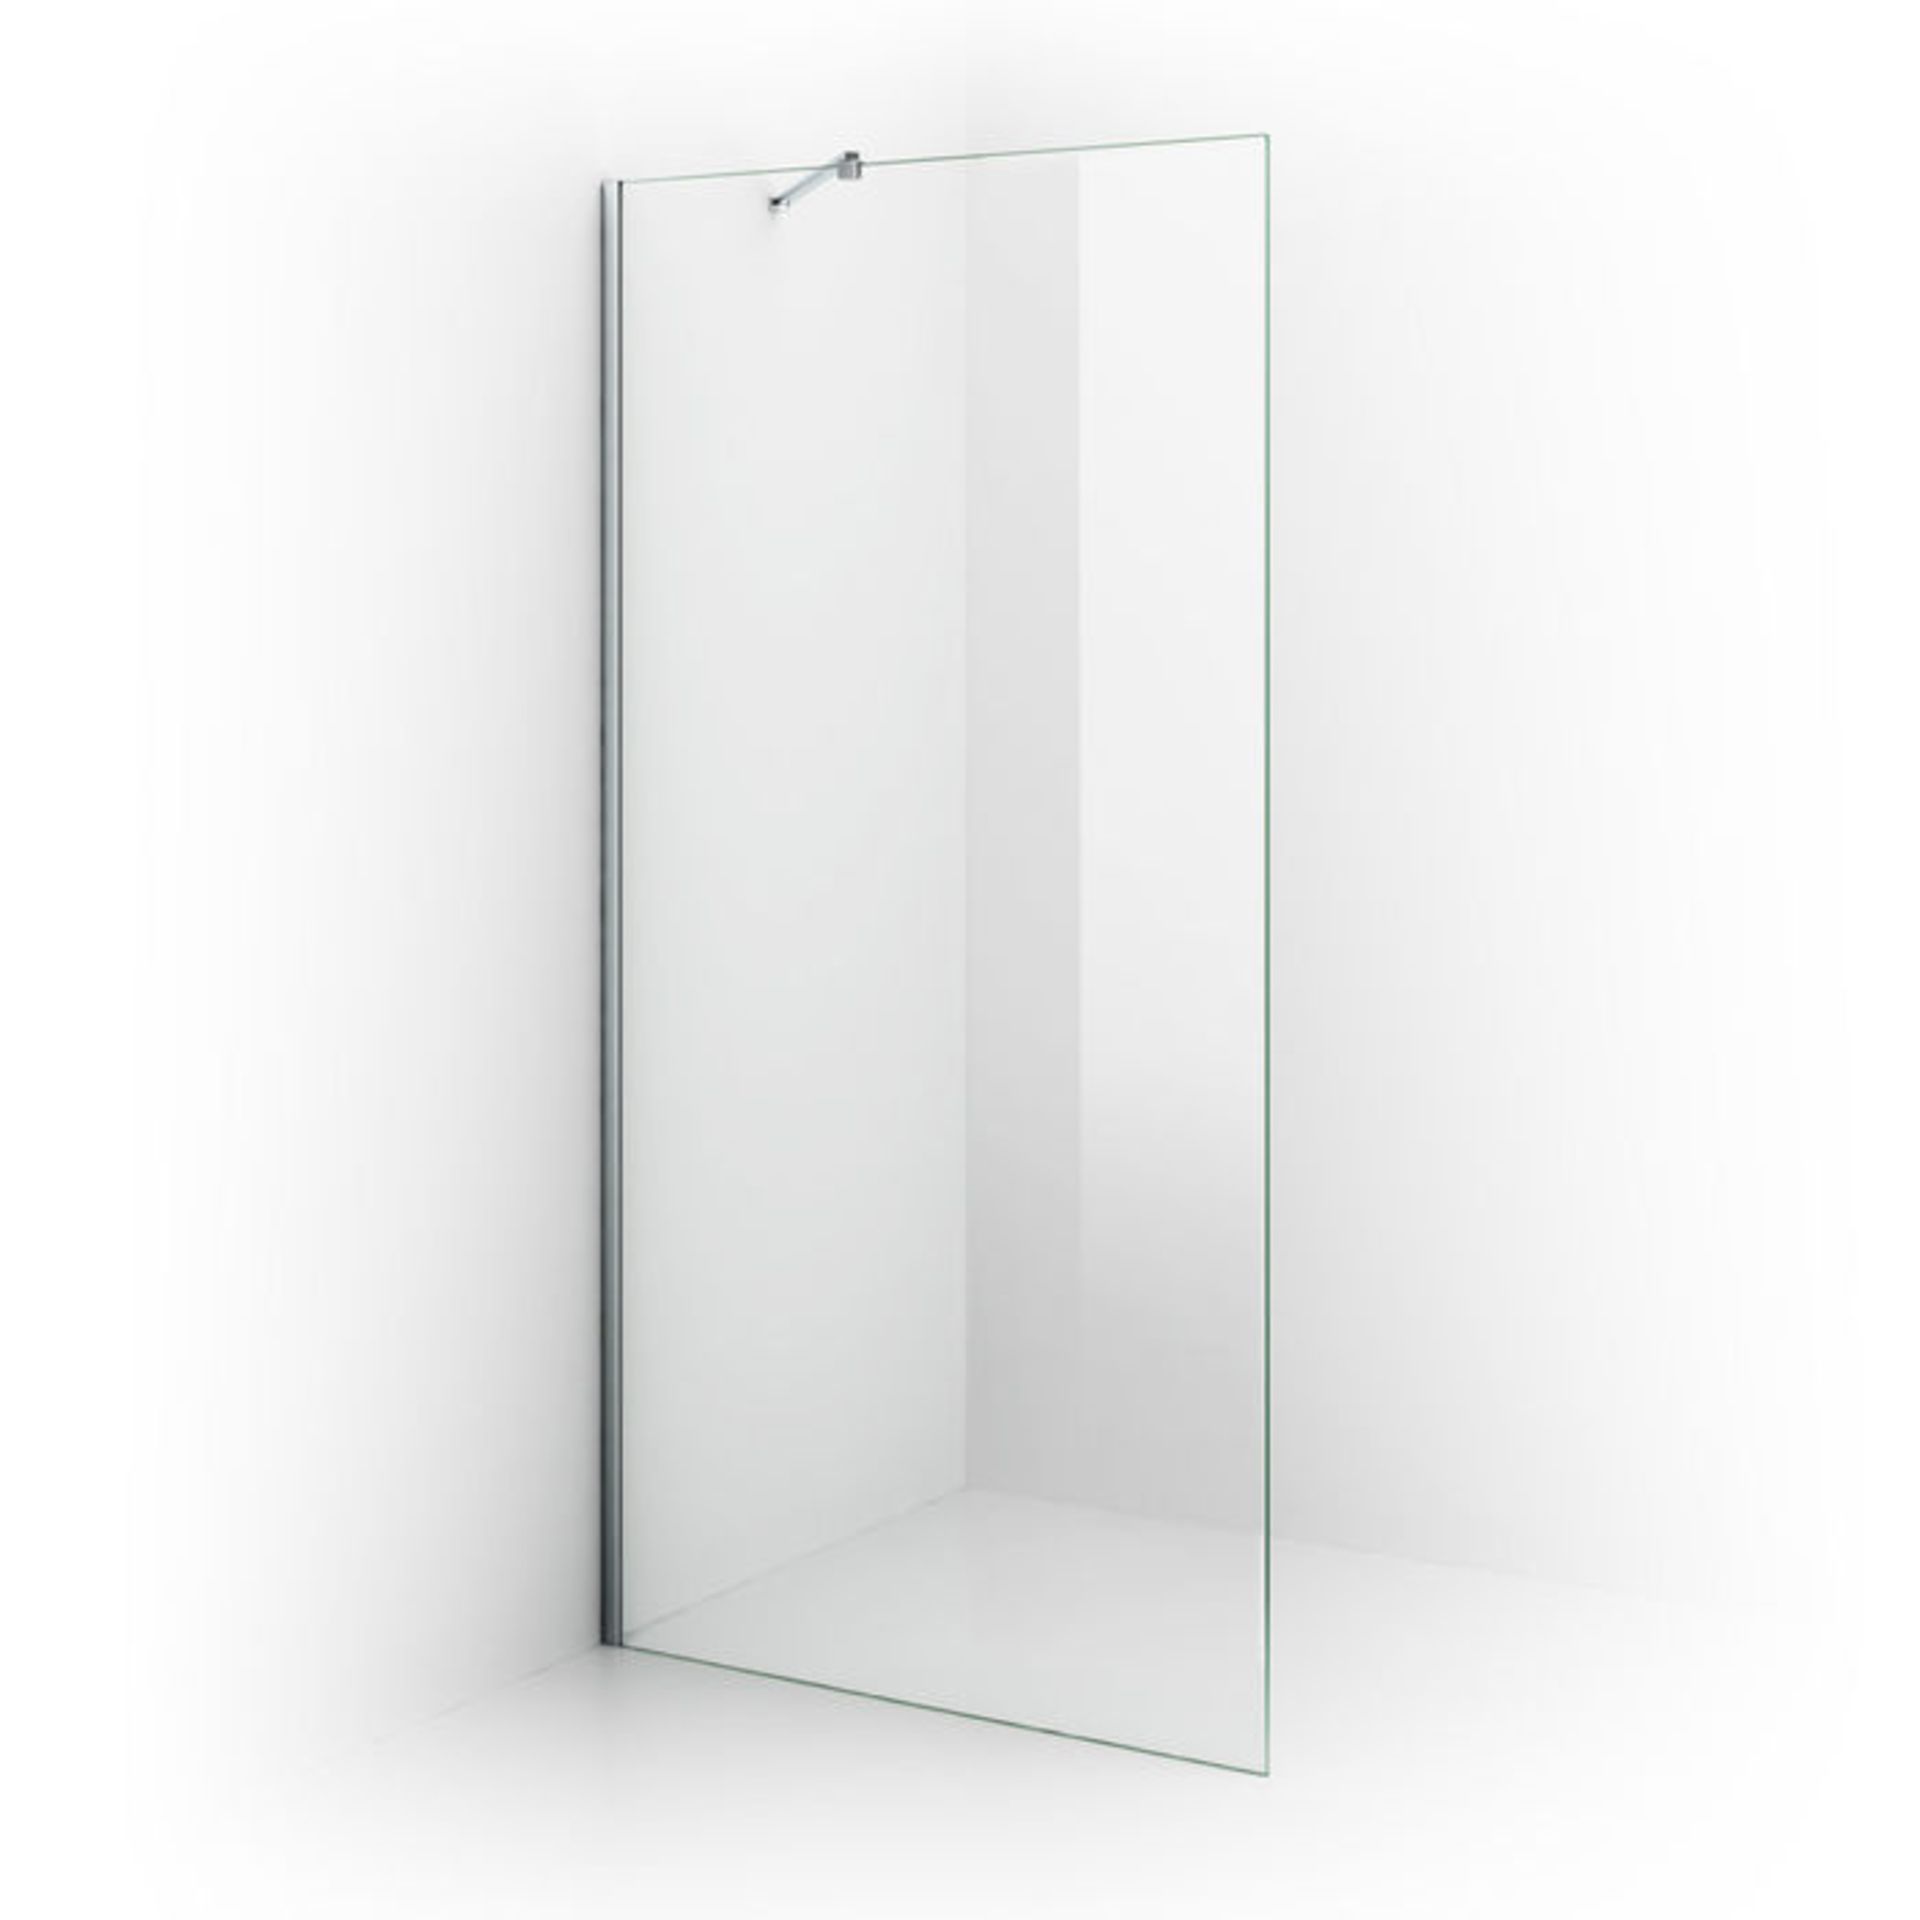 (AL48) 700mm - 8mm - Premium EasyClean Wetroom Panel. RRP £299.99. 8mm EasyClean glass - Our glass - Image 4 of 5